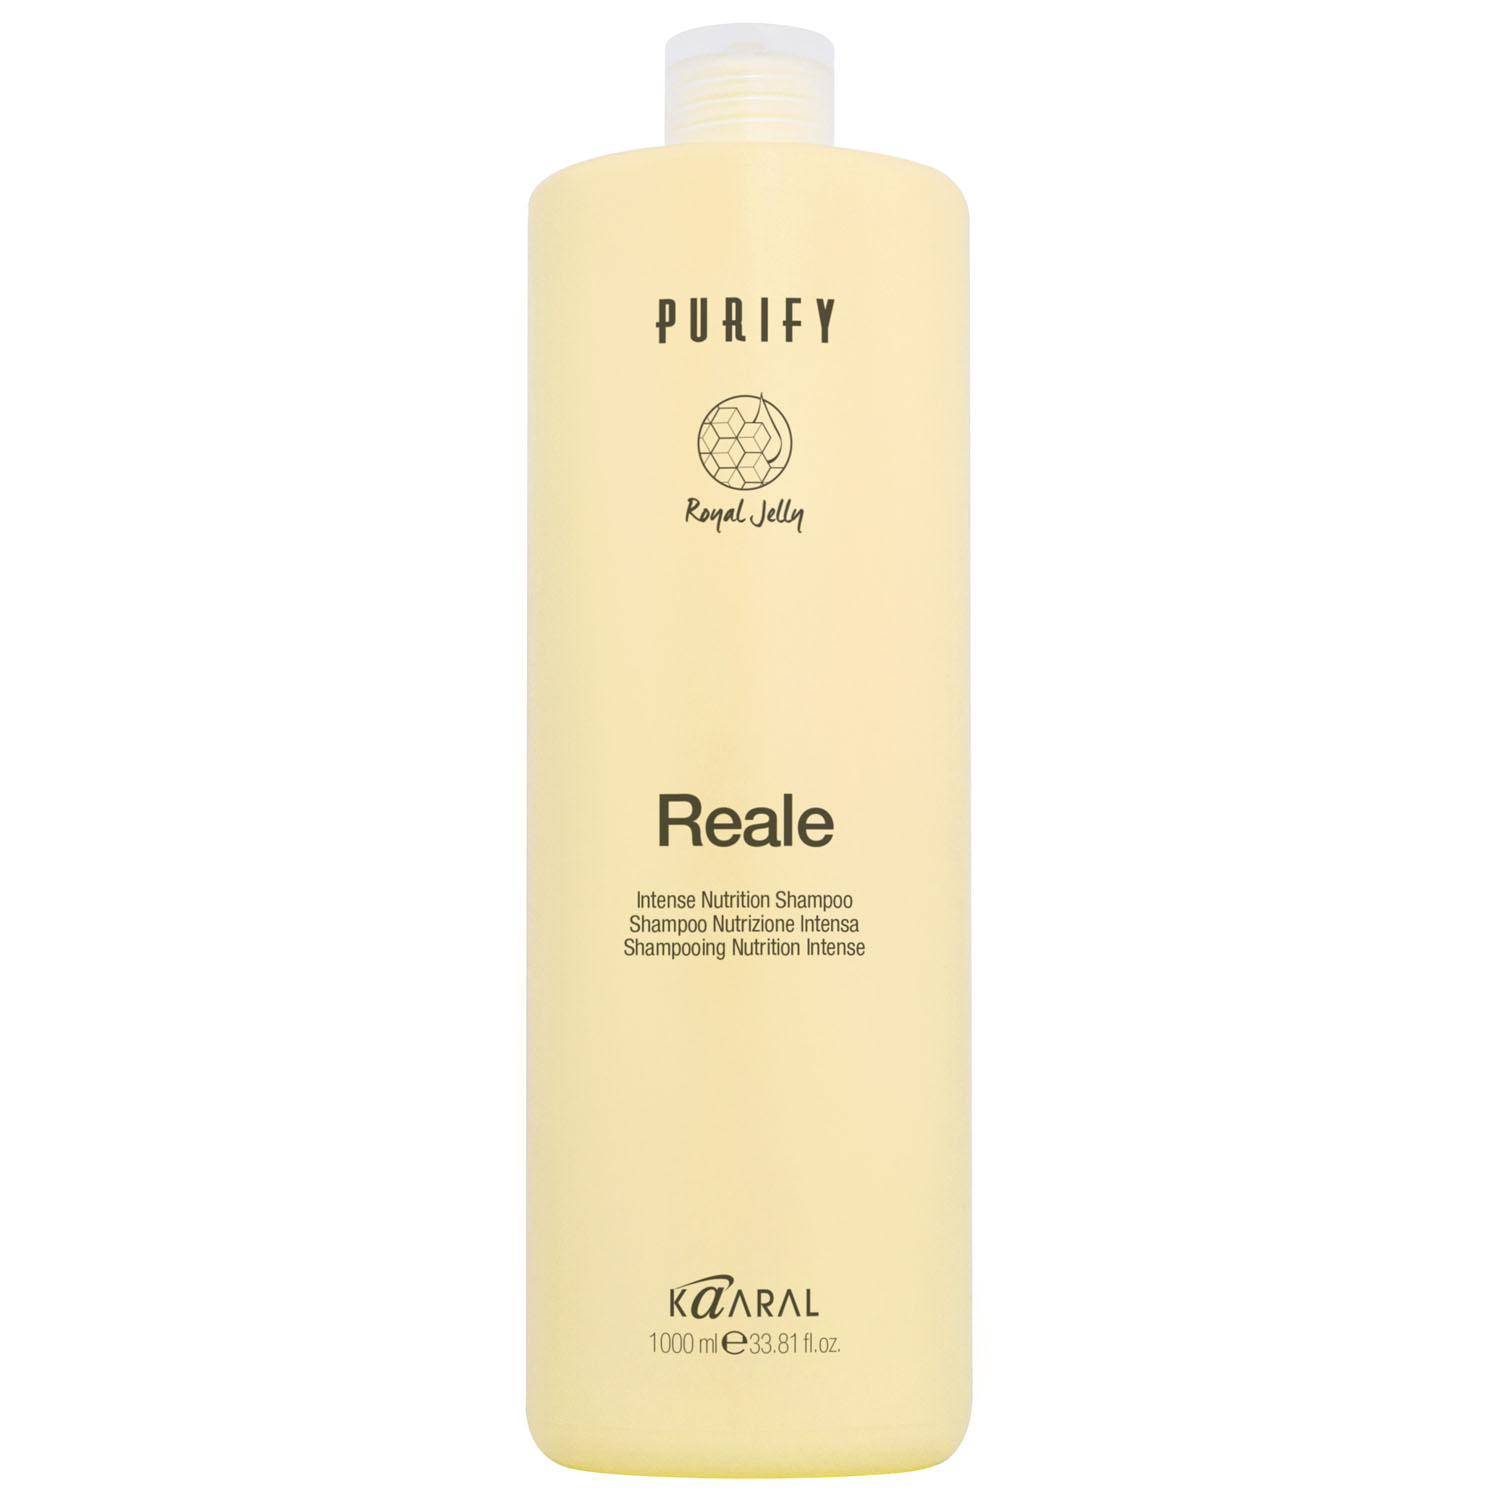 Kaaral Восстанавливающий шампунь для поврежденных волос Intense Nutrition Shampoo, 1000 мл (Kaaral, Purify) шампунь для поврежденных волос восстанавливающий kaaral purify reale shampoo 1000 мл